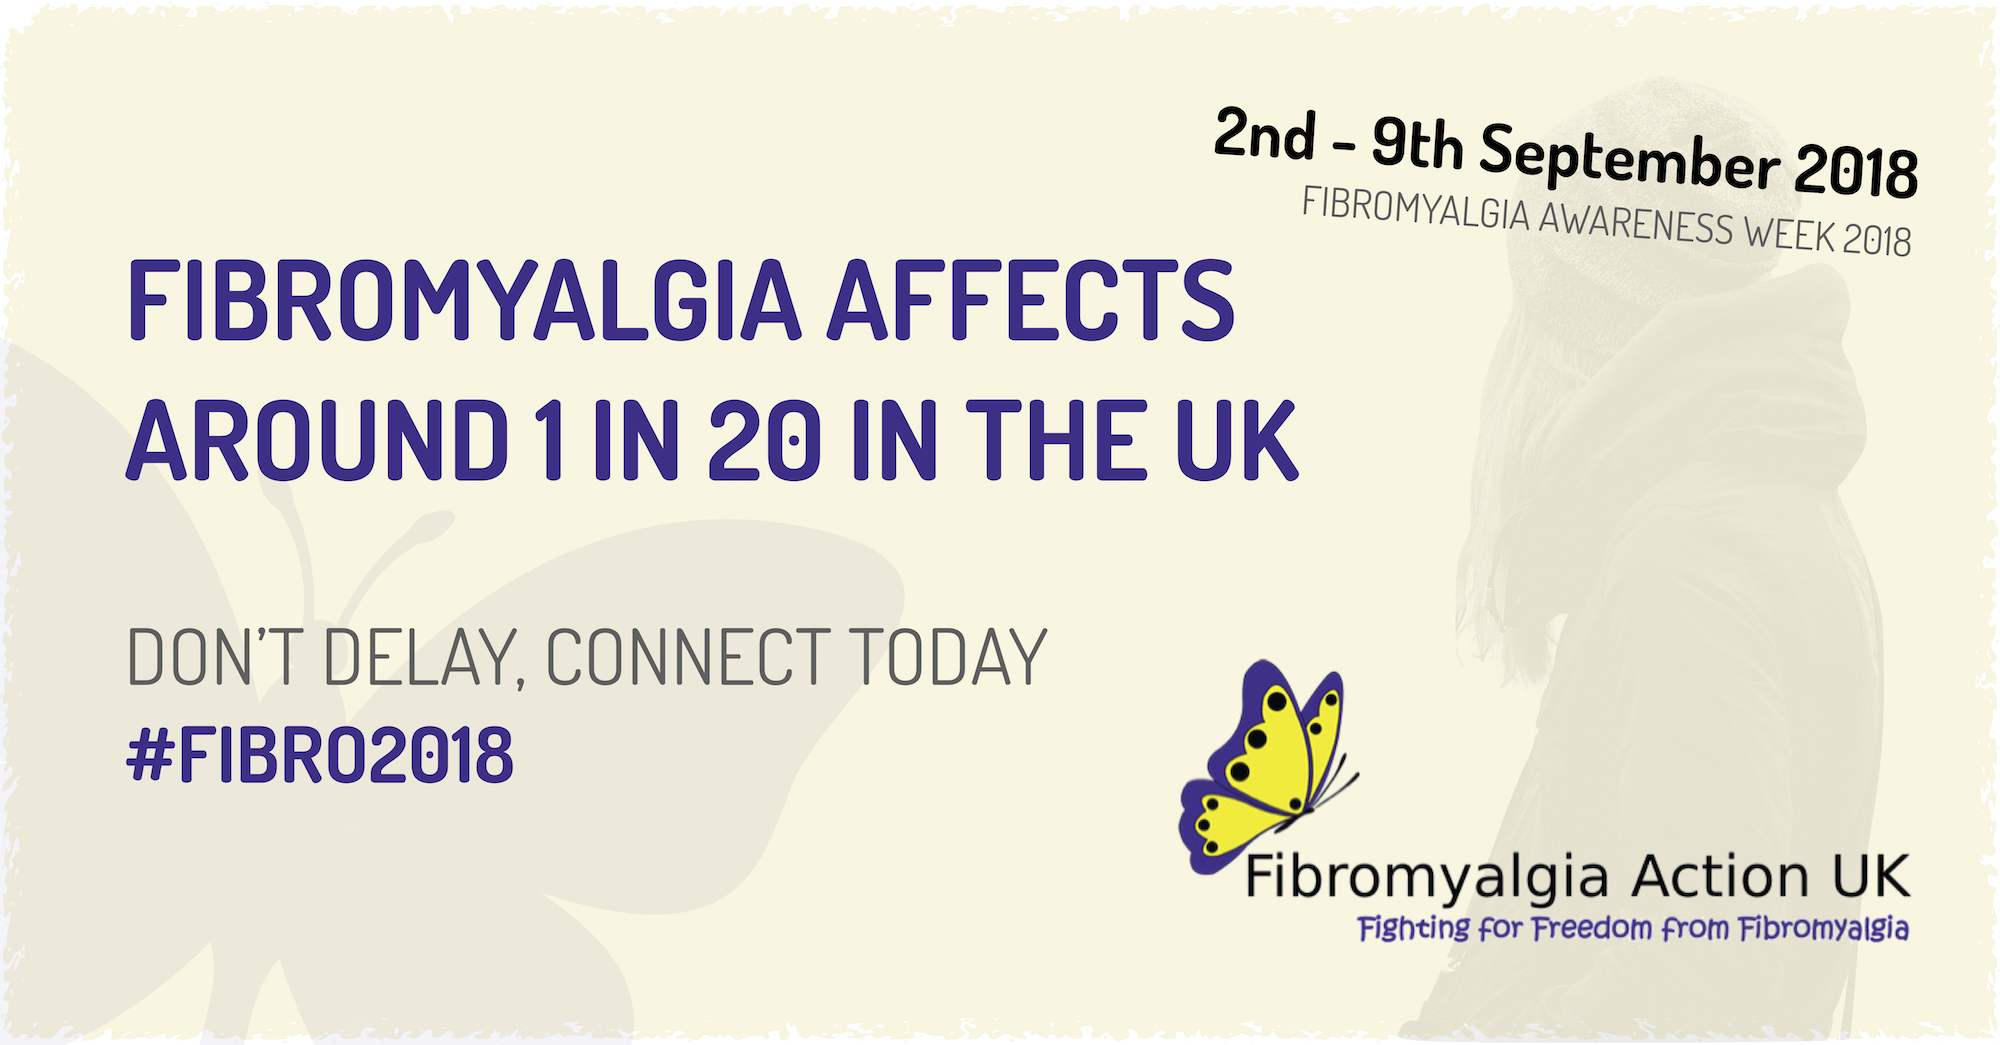 Fibromyalgia Awareness Week banner via Fibromyalgia Action UK - around 1 in 20 in the UK affected